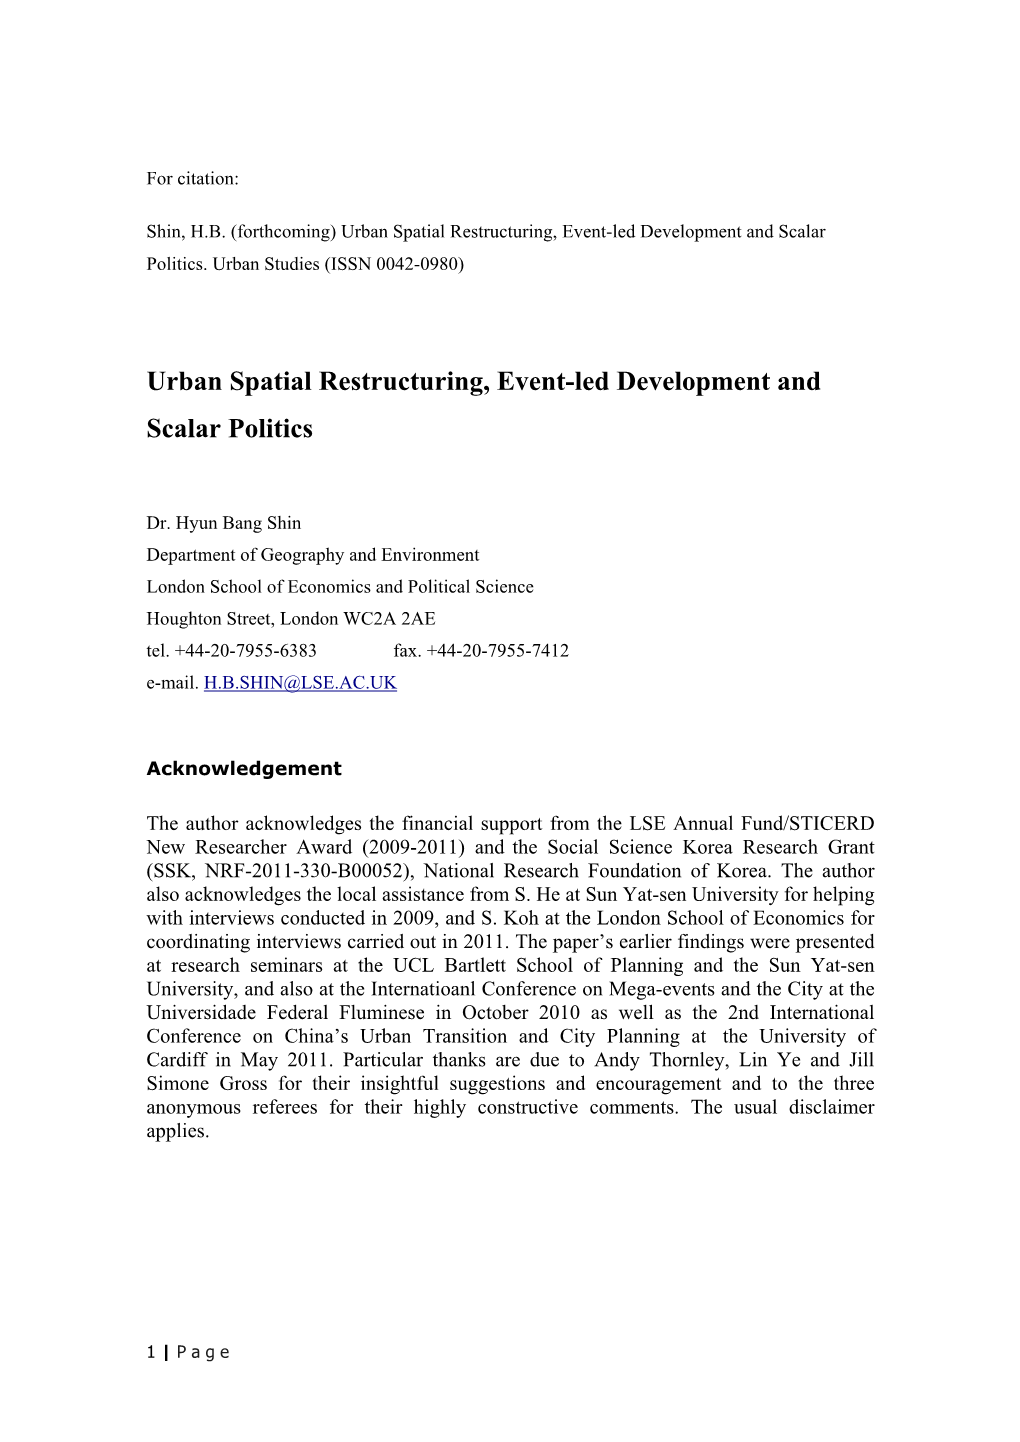 Urban Spatial Restructuring, Event-Led Development and Scalar Politics